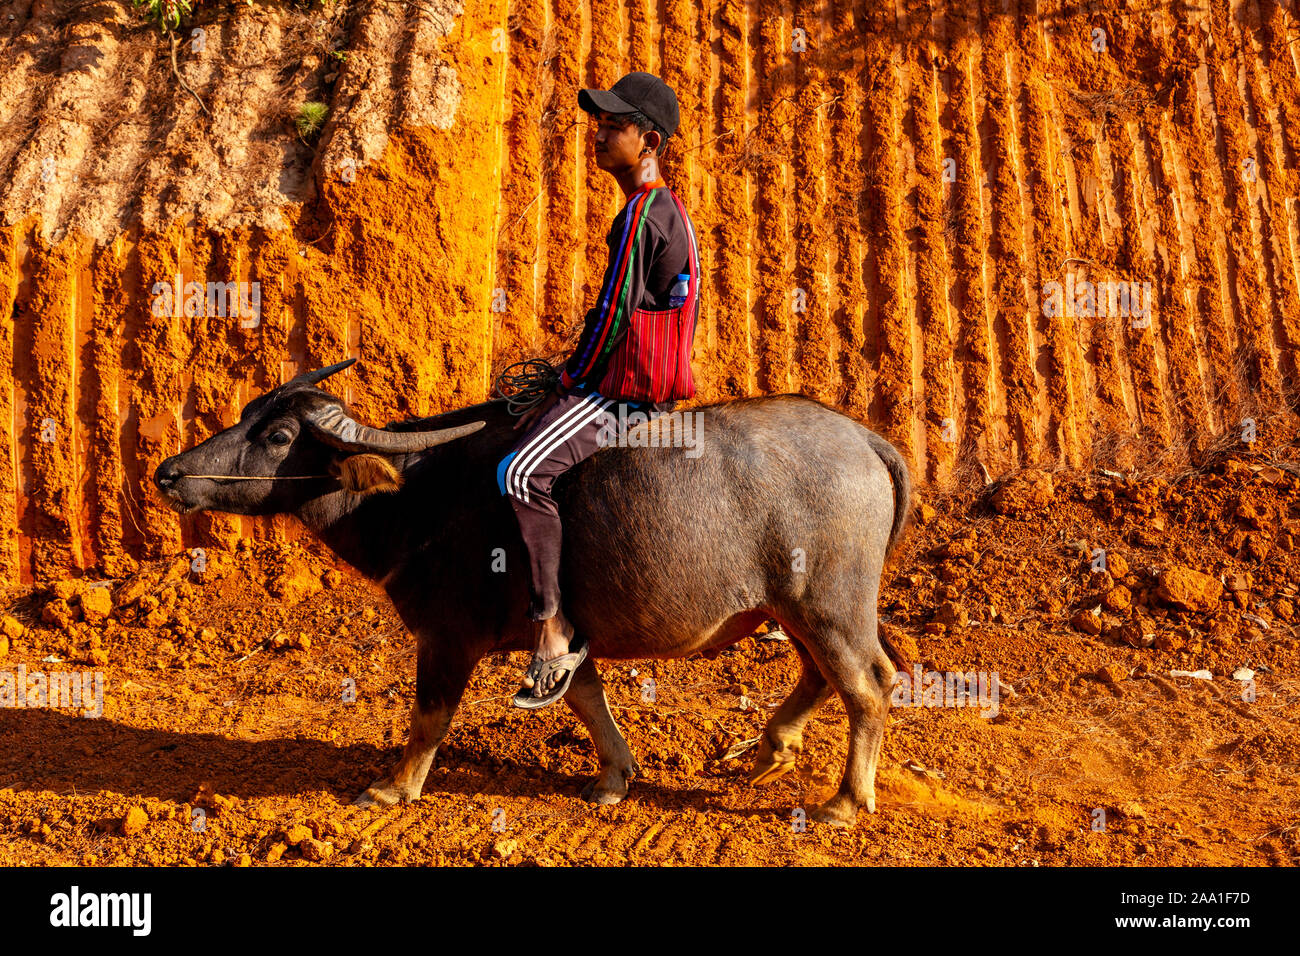 A Young Man Riding A Water Buffalo, Pindaya, Shan State, Myanmar. Stock Photo